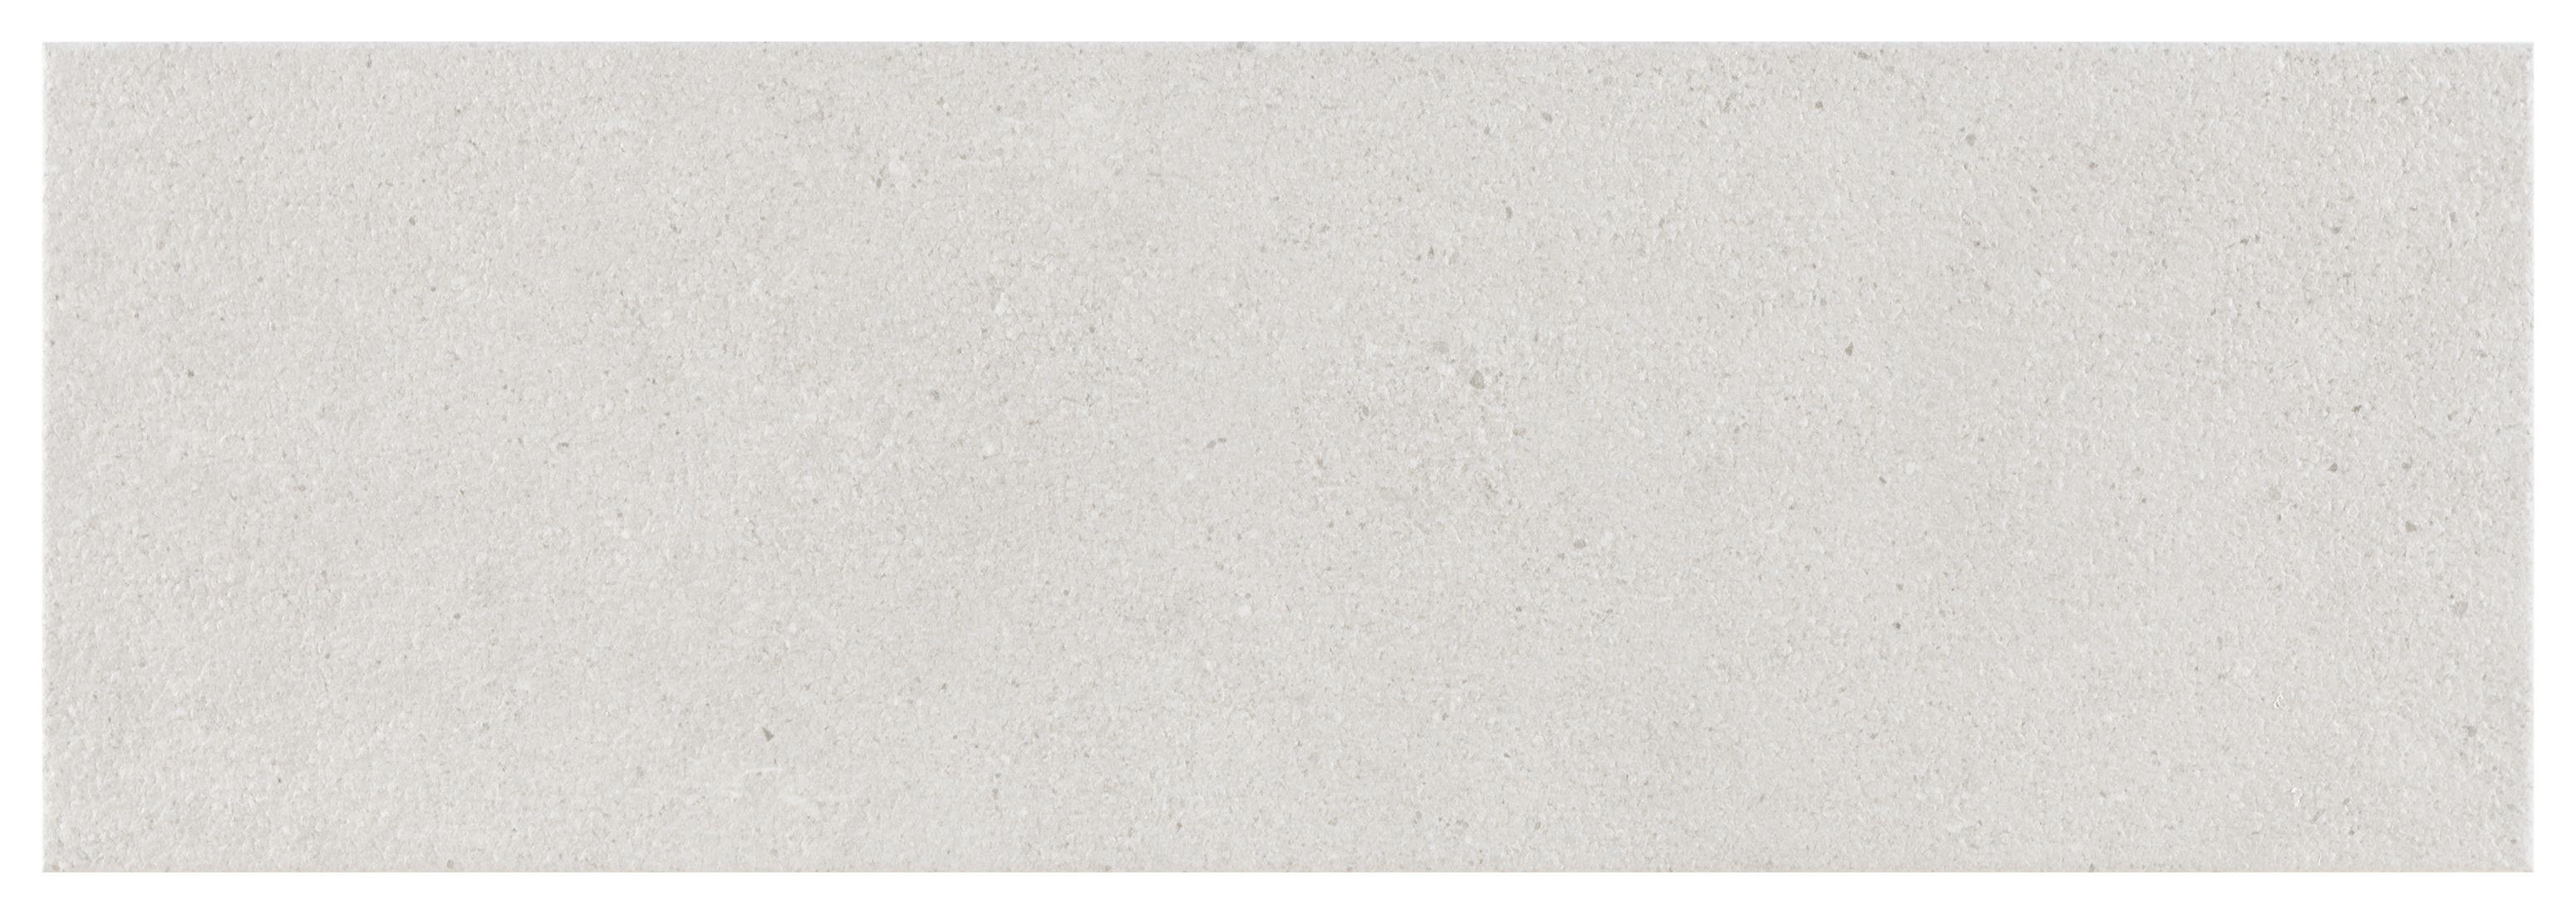 Wickes Boutique Calatrava Light Grey Matt Ceramic Wall Tile - Cut Sample